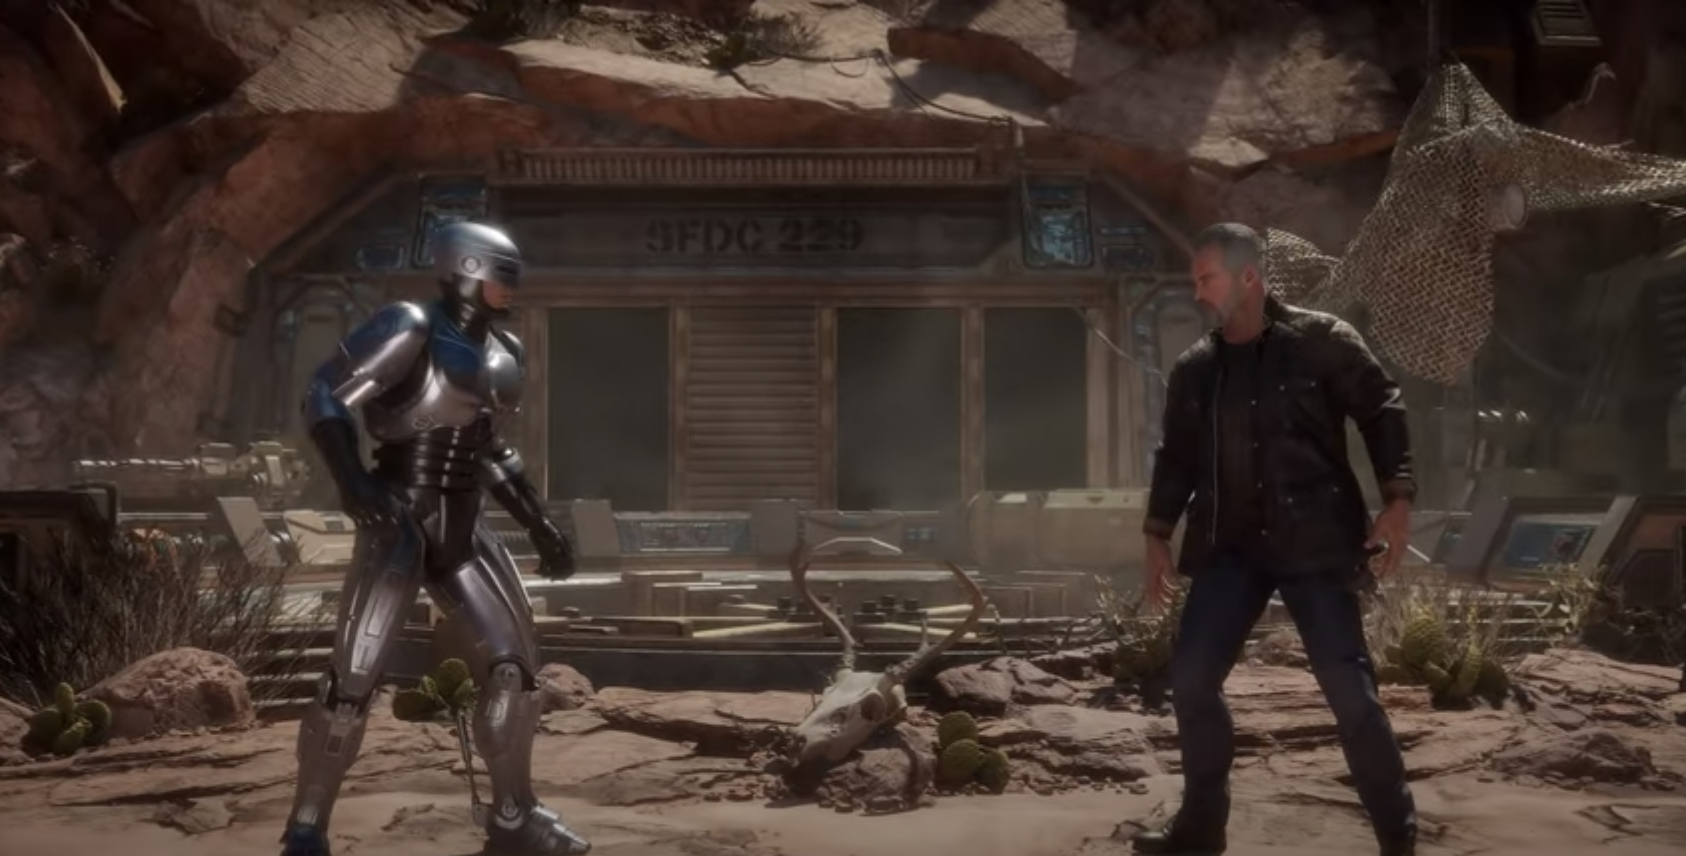 RoboCop & Terminator Issue Cybernetic Fades In 2 Mortal Kombat 11 Trailers